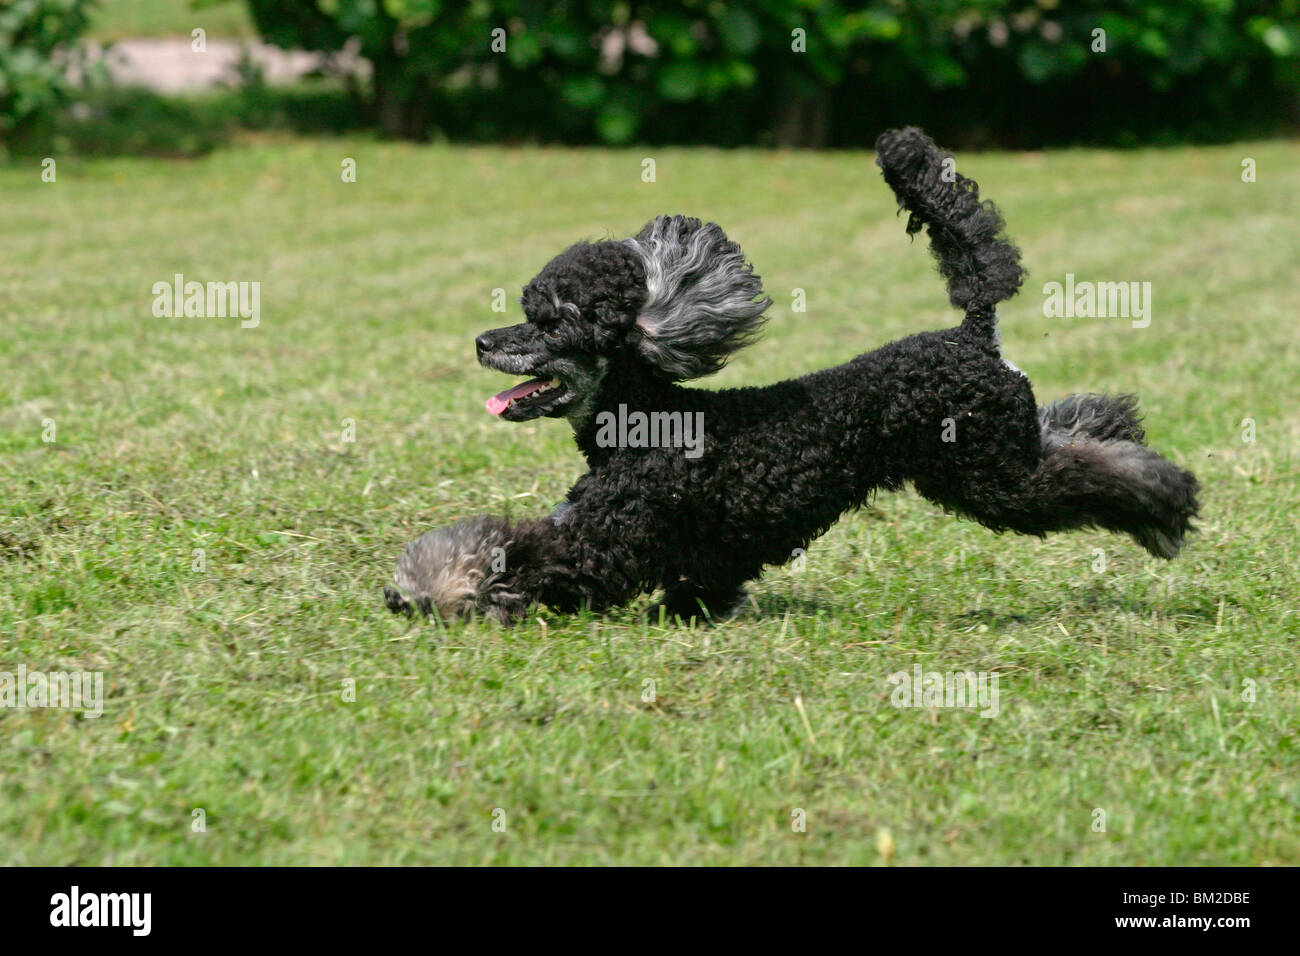 Pudel in Bewegung / poodle in action Stock Photo